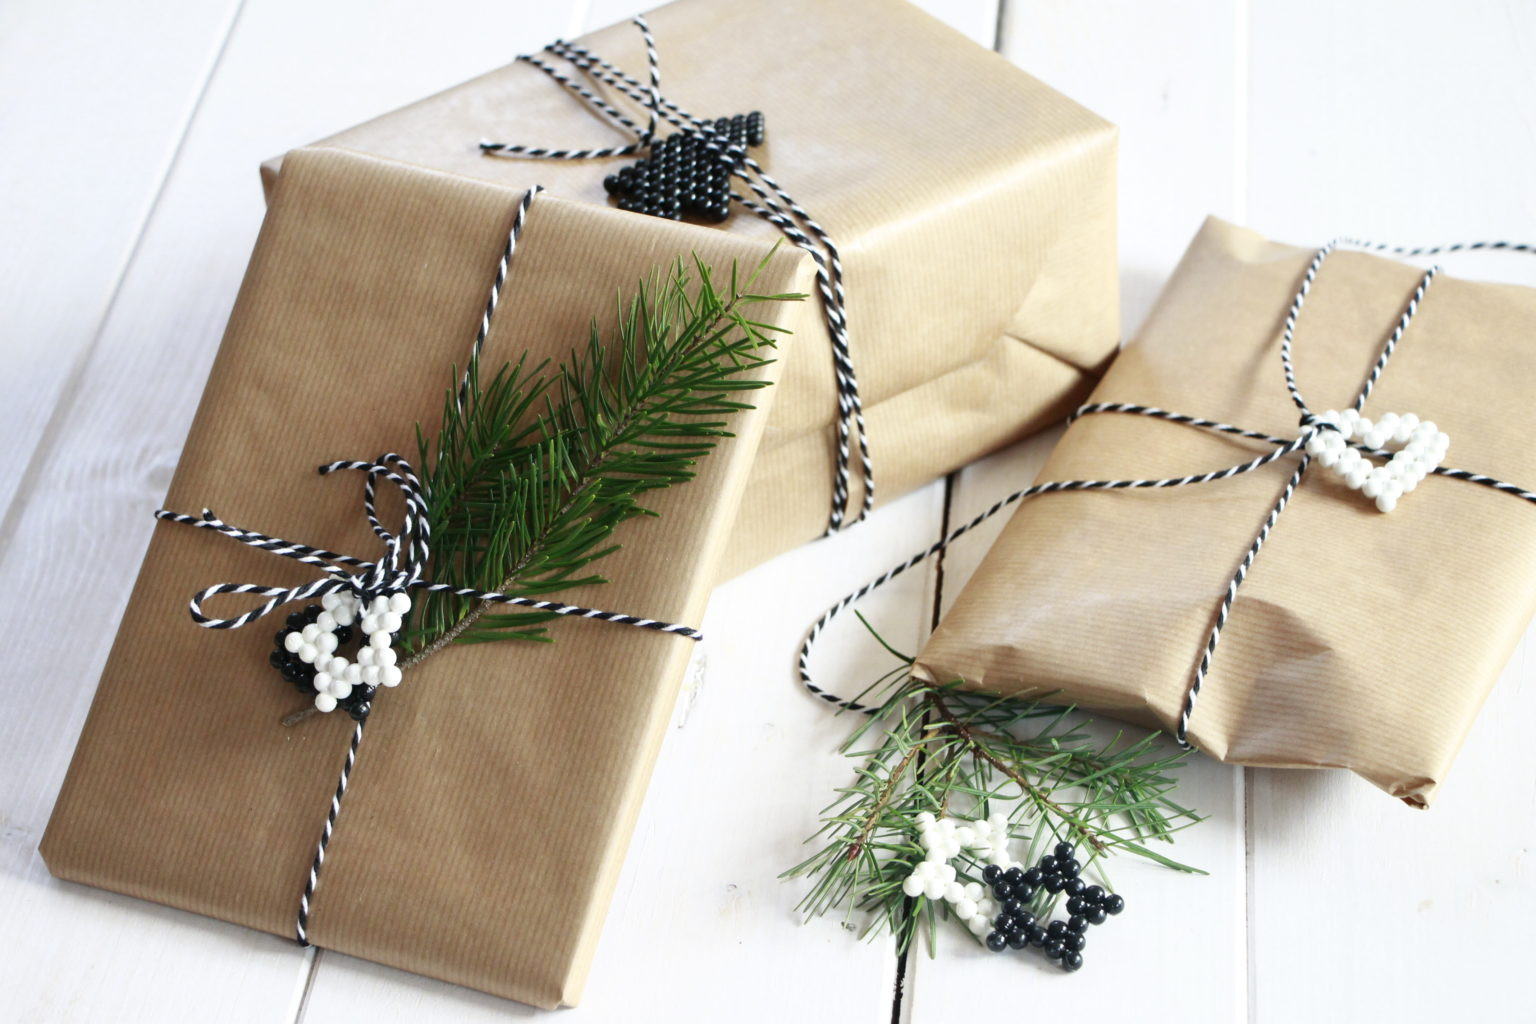 Geschenke Verpacken
 Weihnachtsgeschenke verpacken Ideen mit Aquabeads